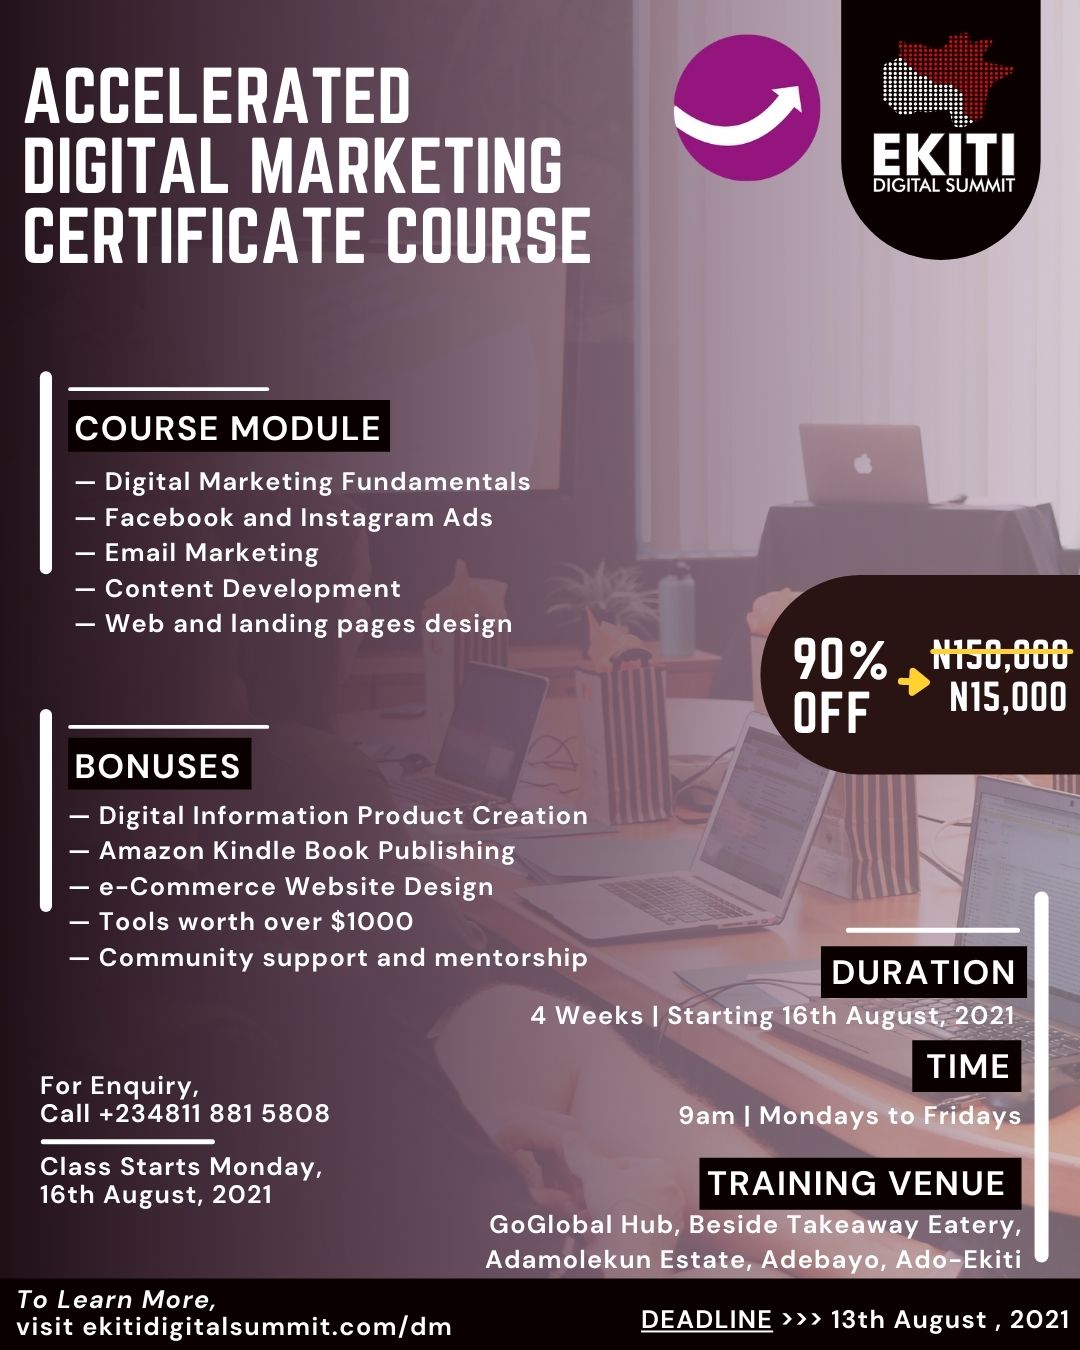 Ekiti Digital Summit Offers 90% Whopping Discount on Digital Marketing Training